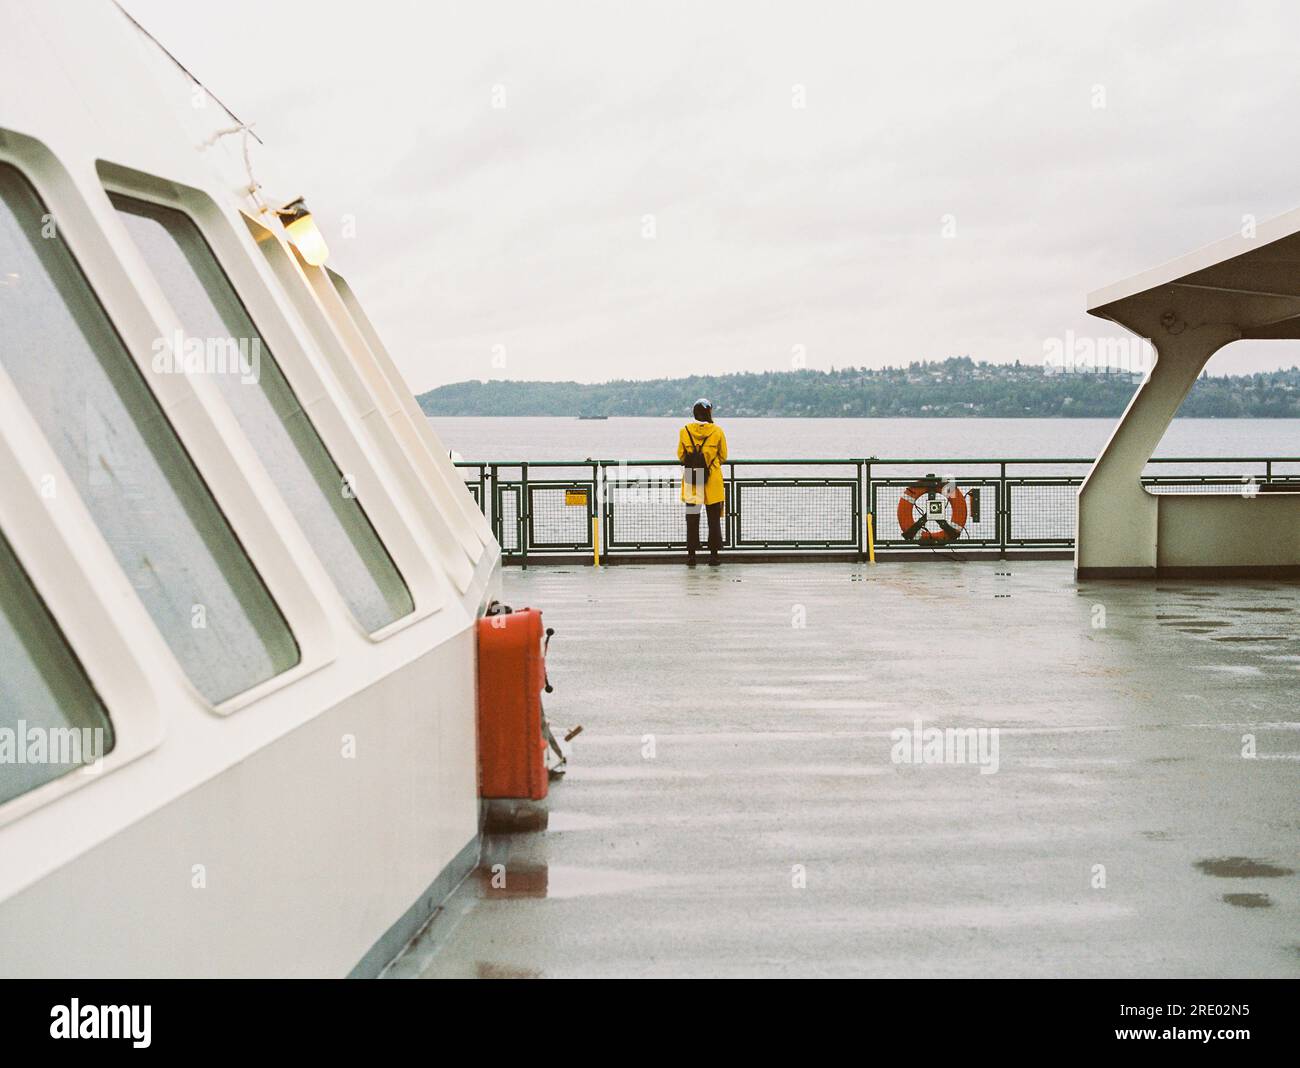 Woman in yellow rain jacket rides ferry in rain, on 35mm film Stock Photo